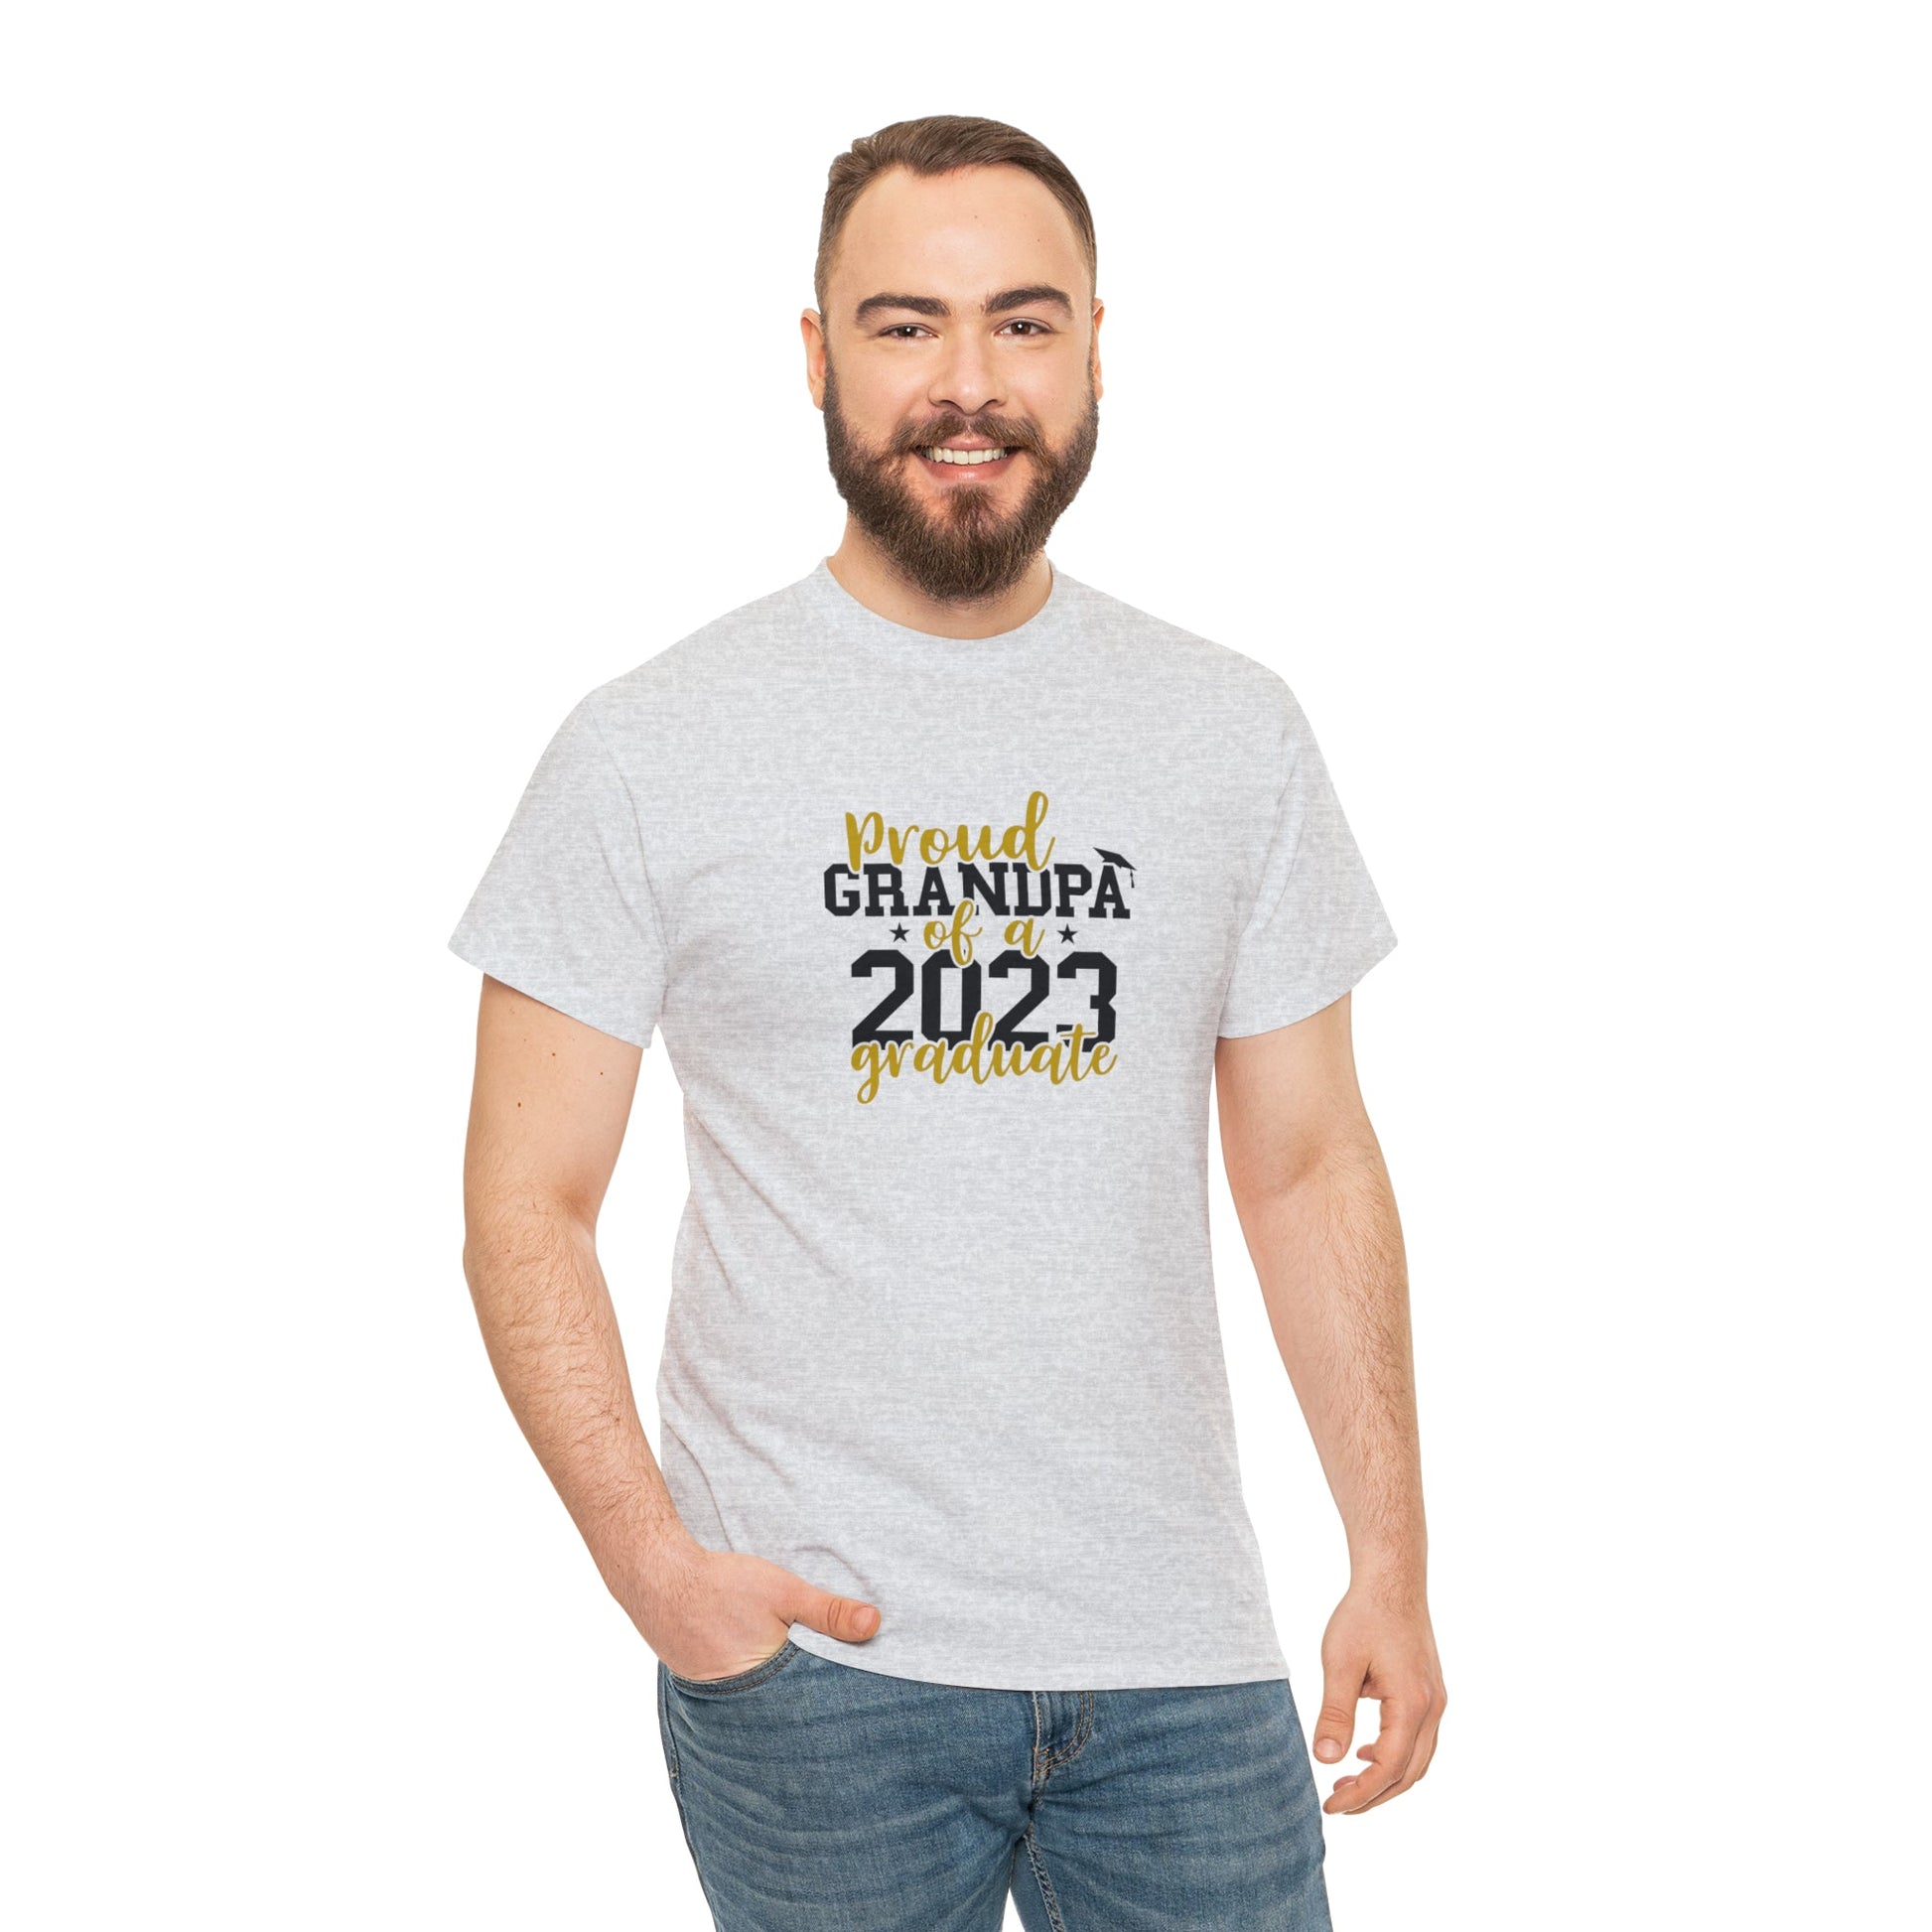 Proud GRANDPA of 2023 Graduate Short Sleeve Cotton T-Shirt - numonet